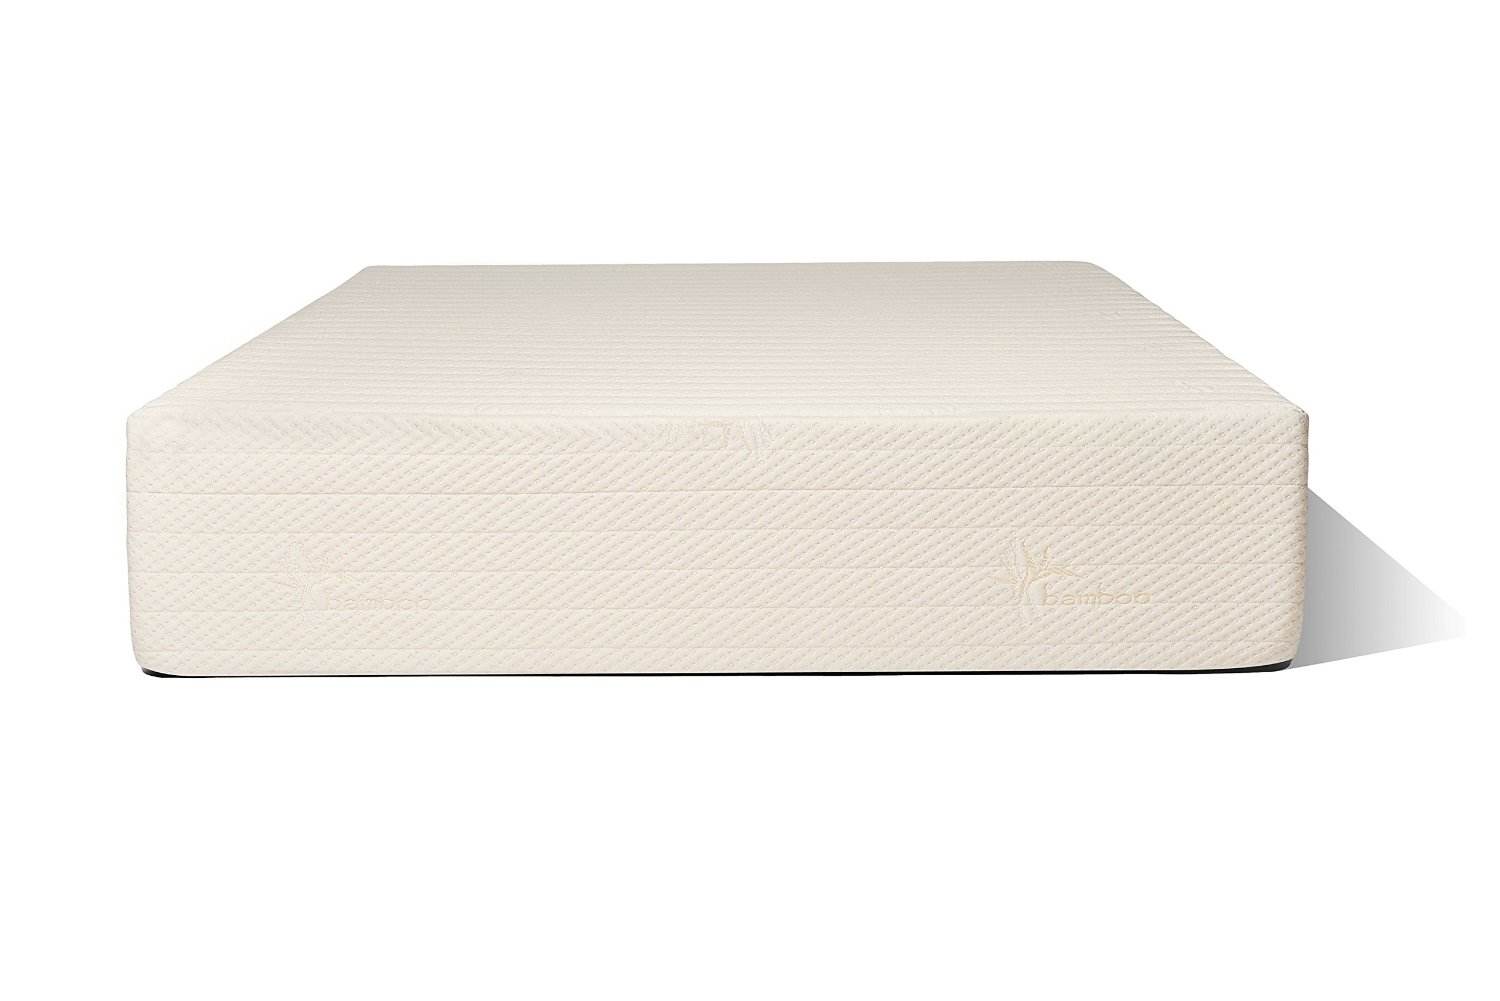 brentwood 13 inch memory foam mattress review